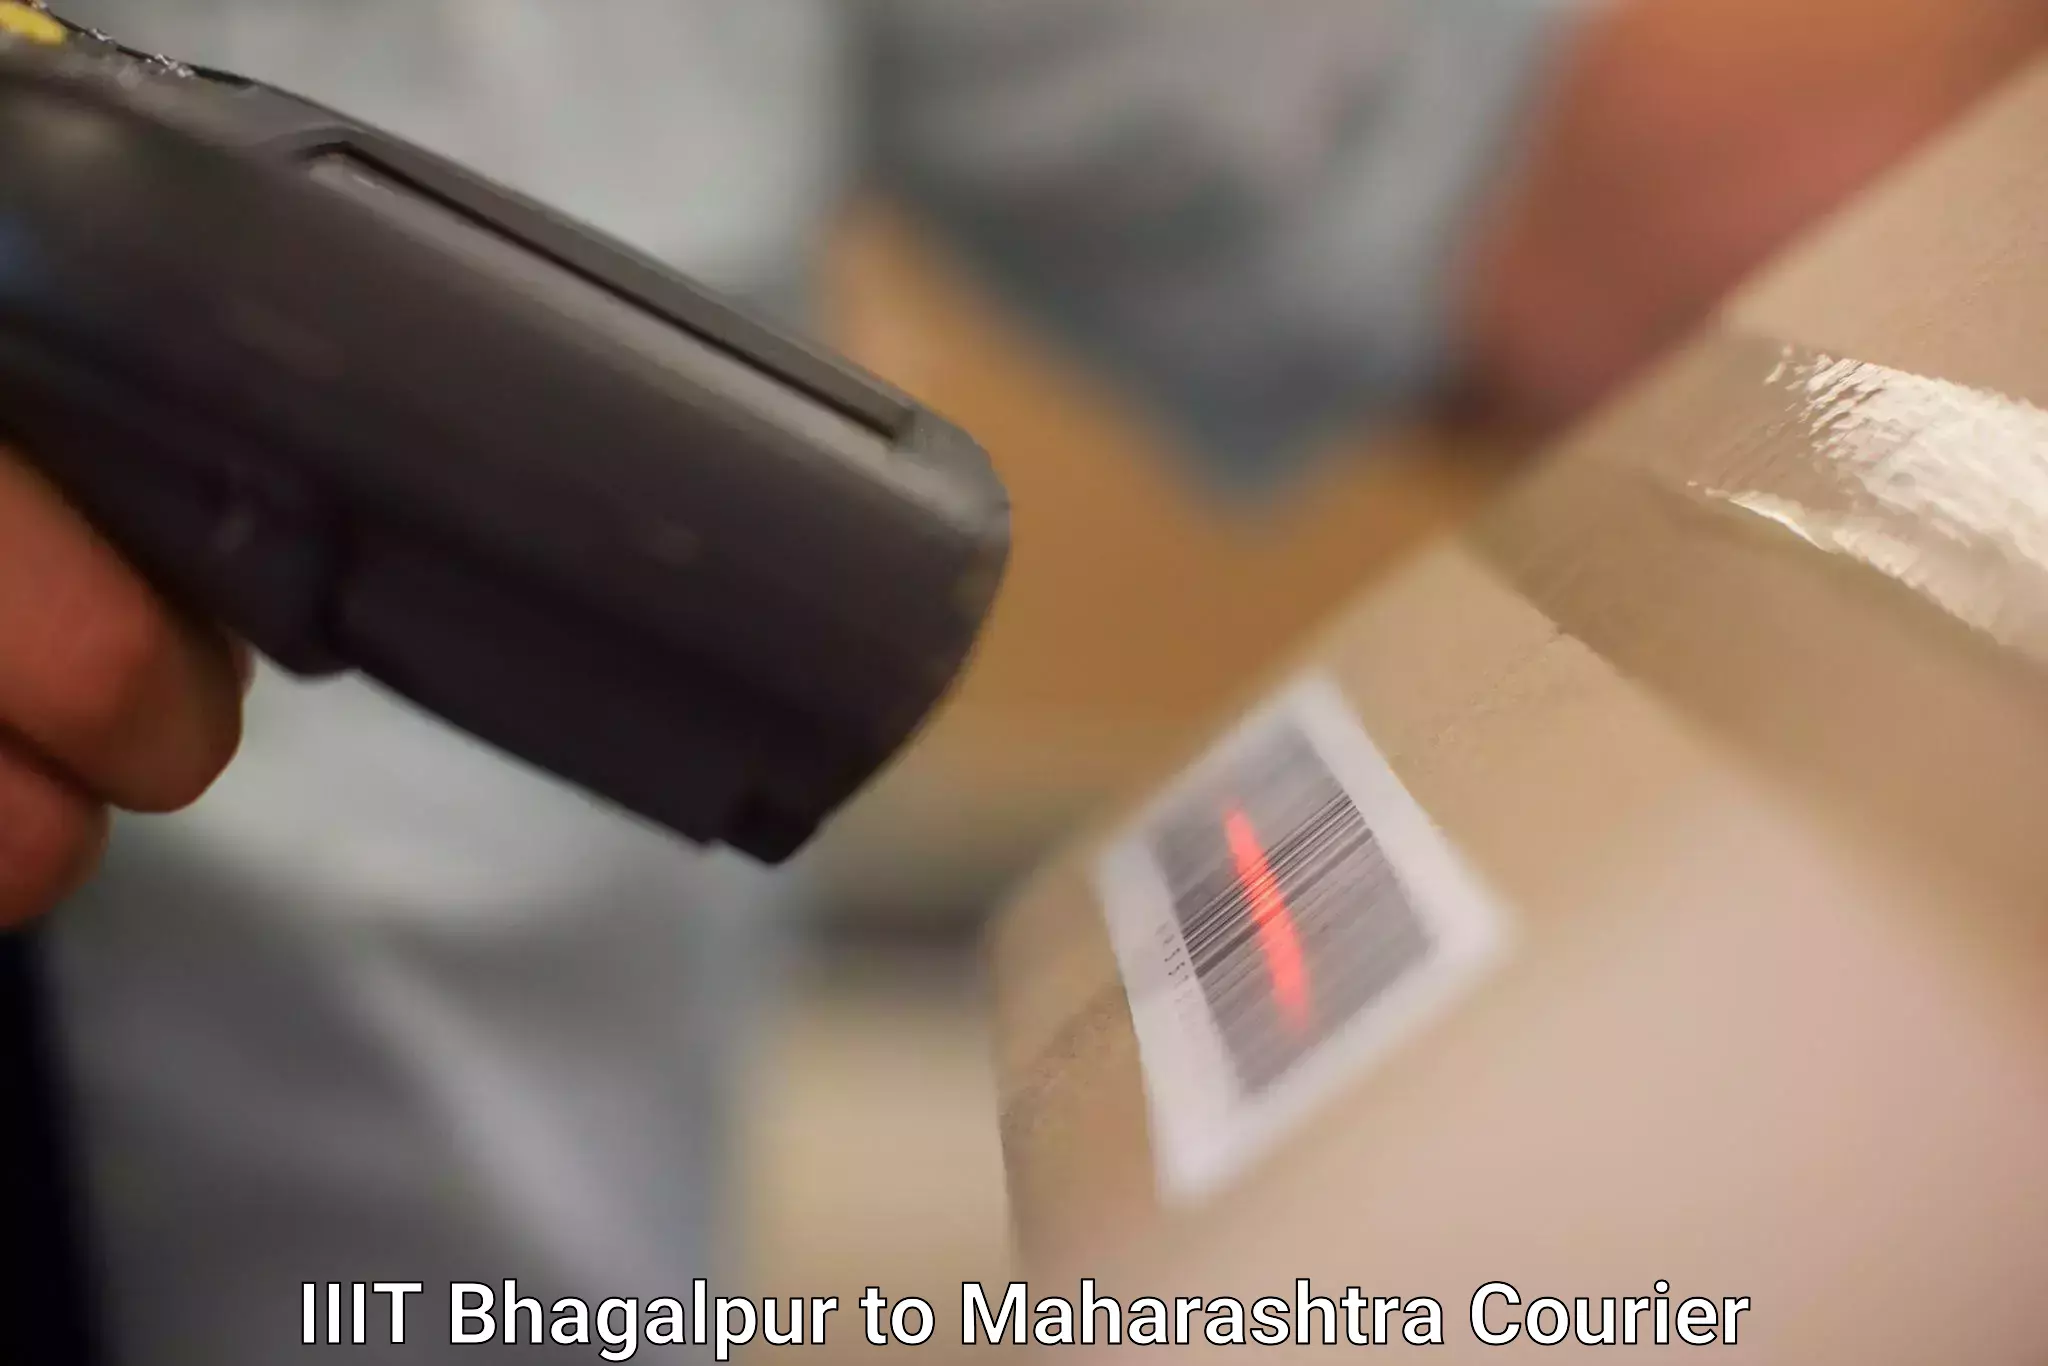 Cargo delivery service IIIT Bhagalpur to Maharashtra